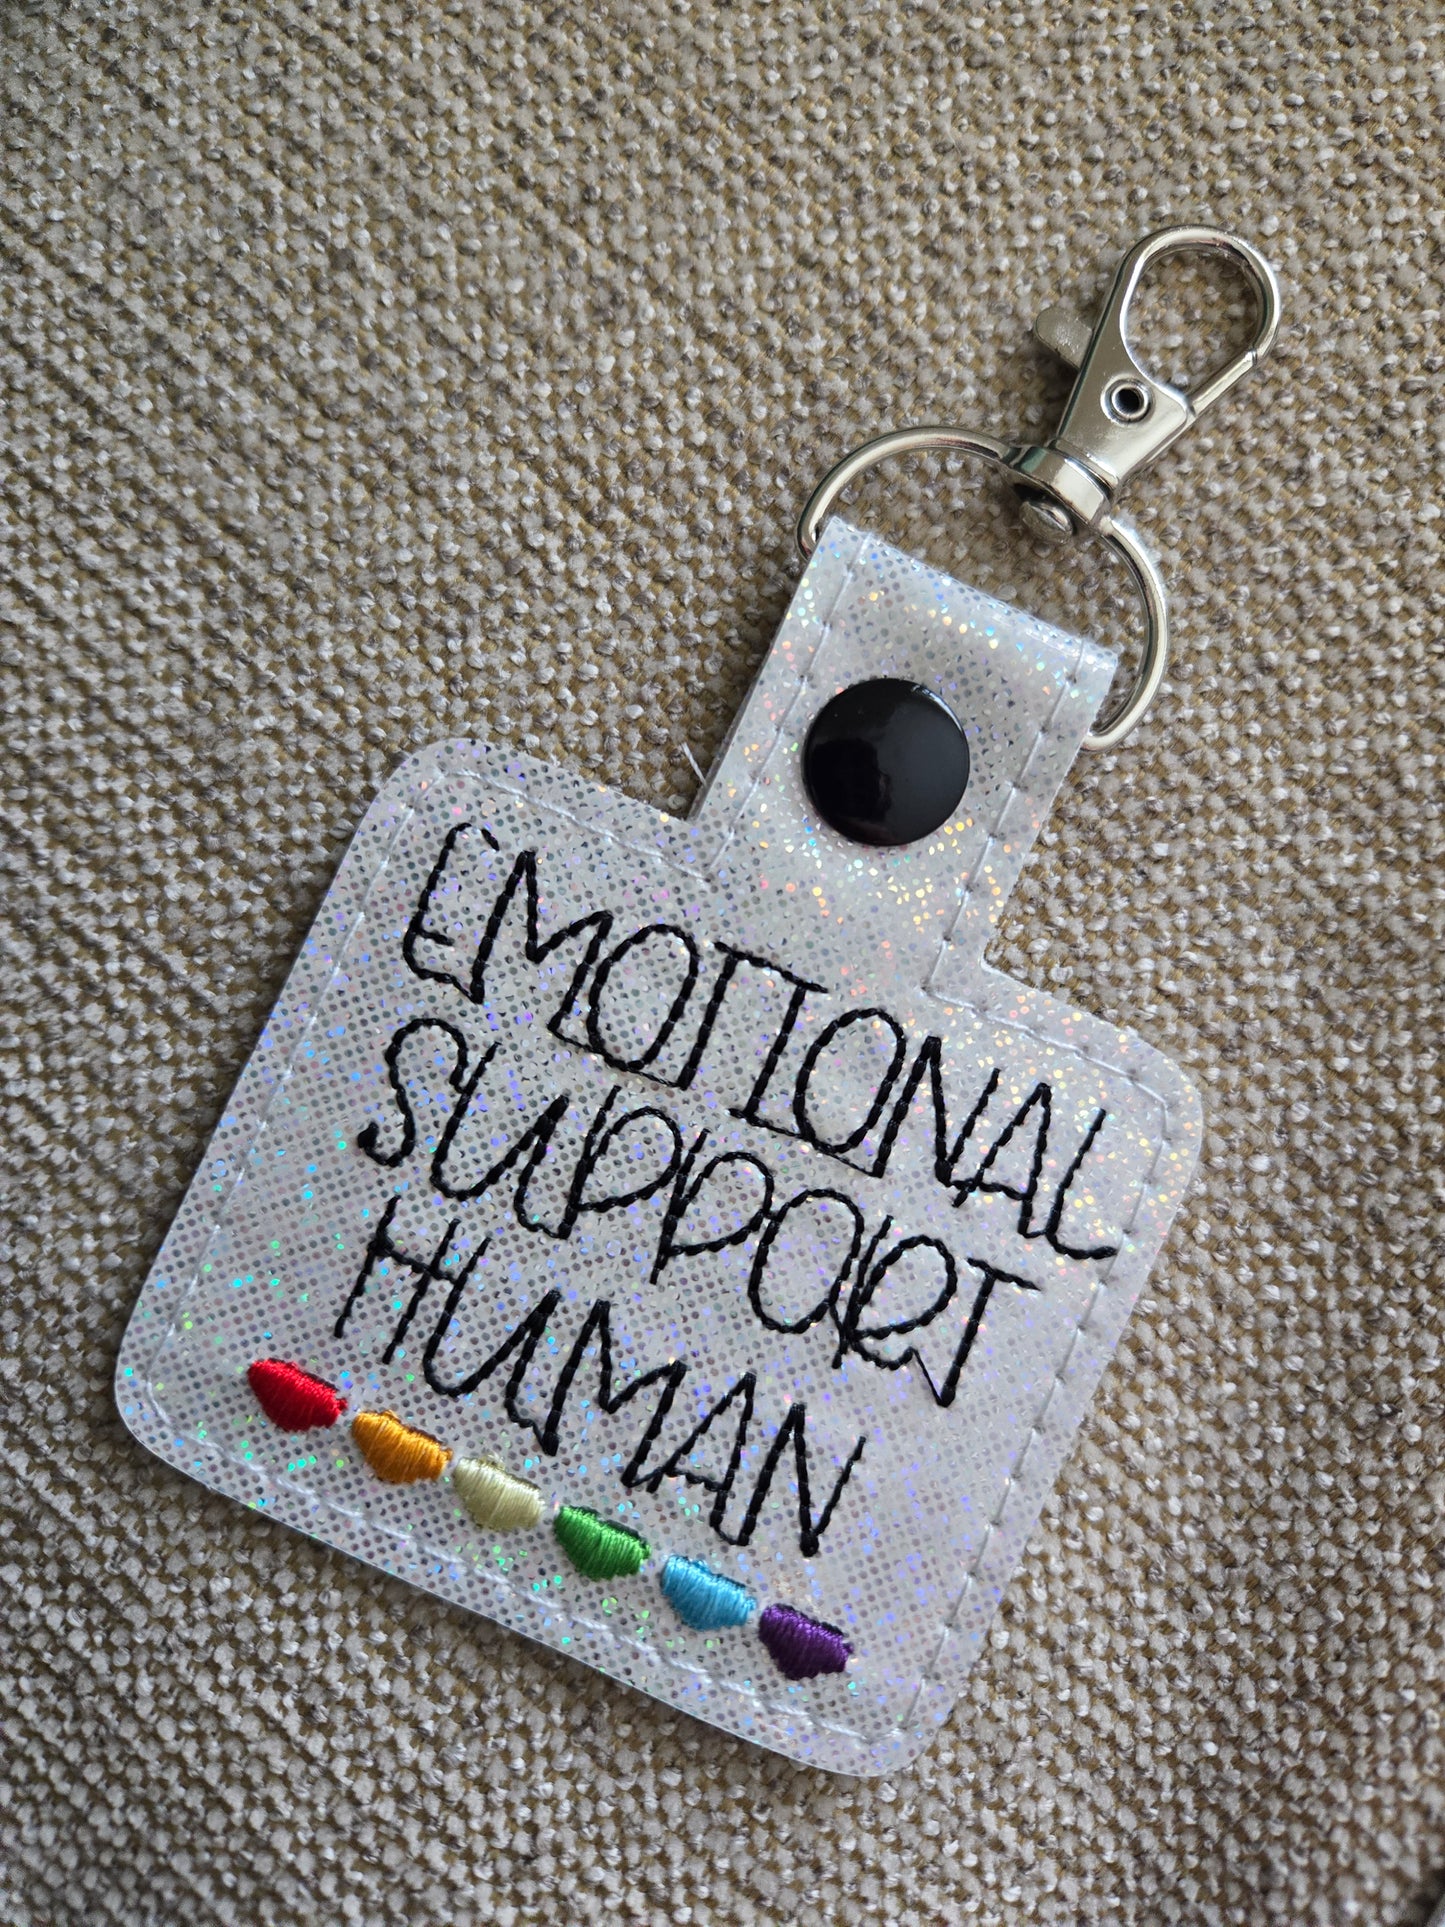 Emotional Support Keychain